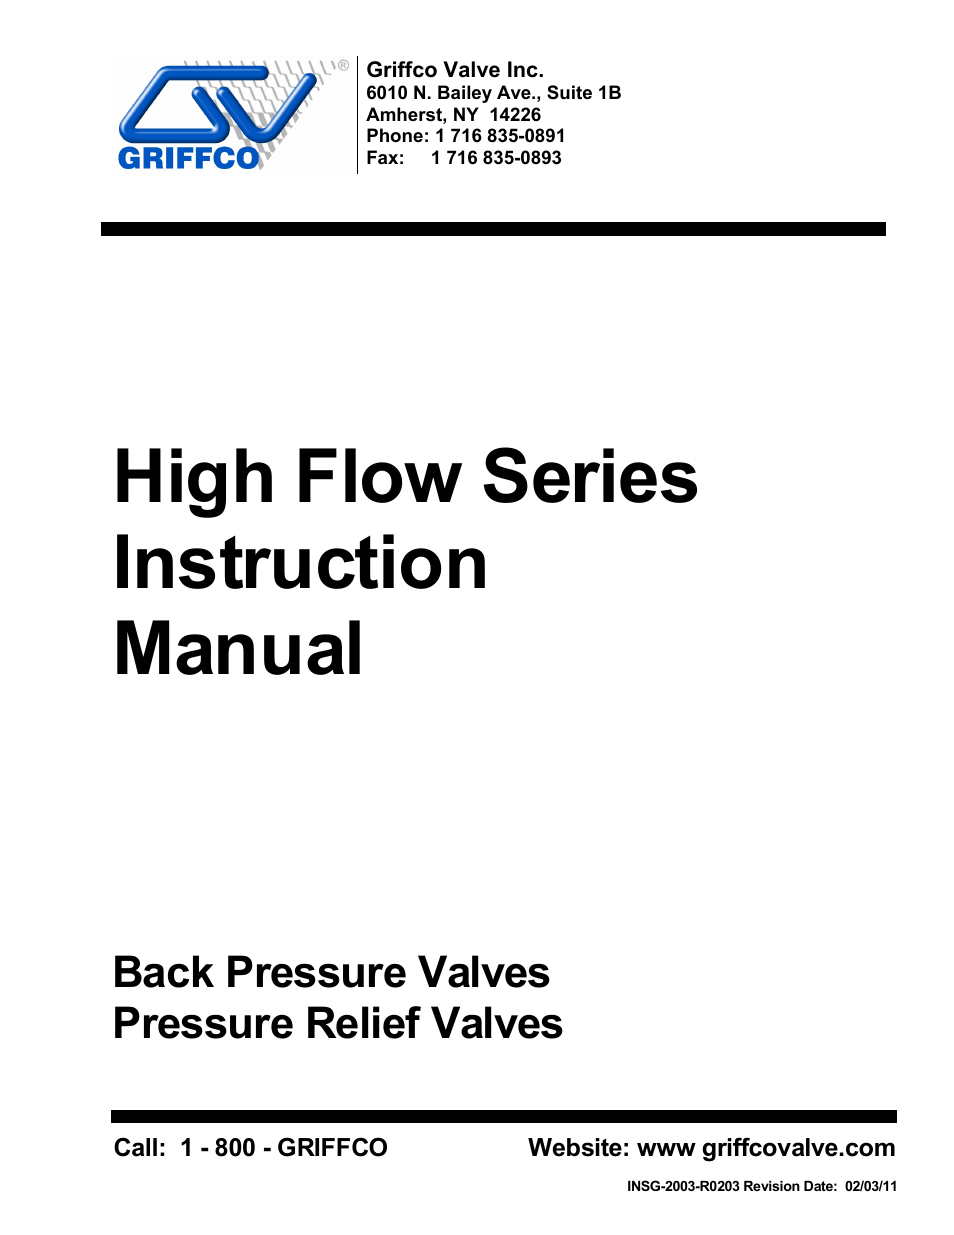 High-Flow Series